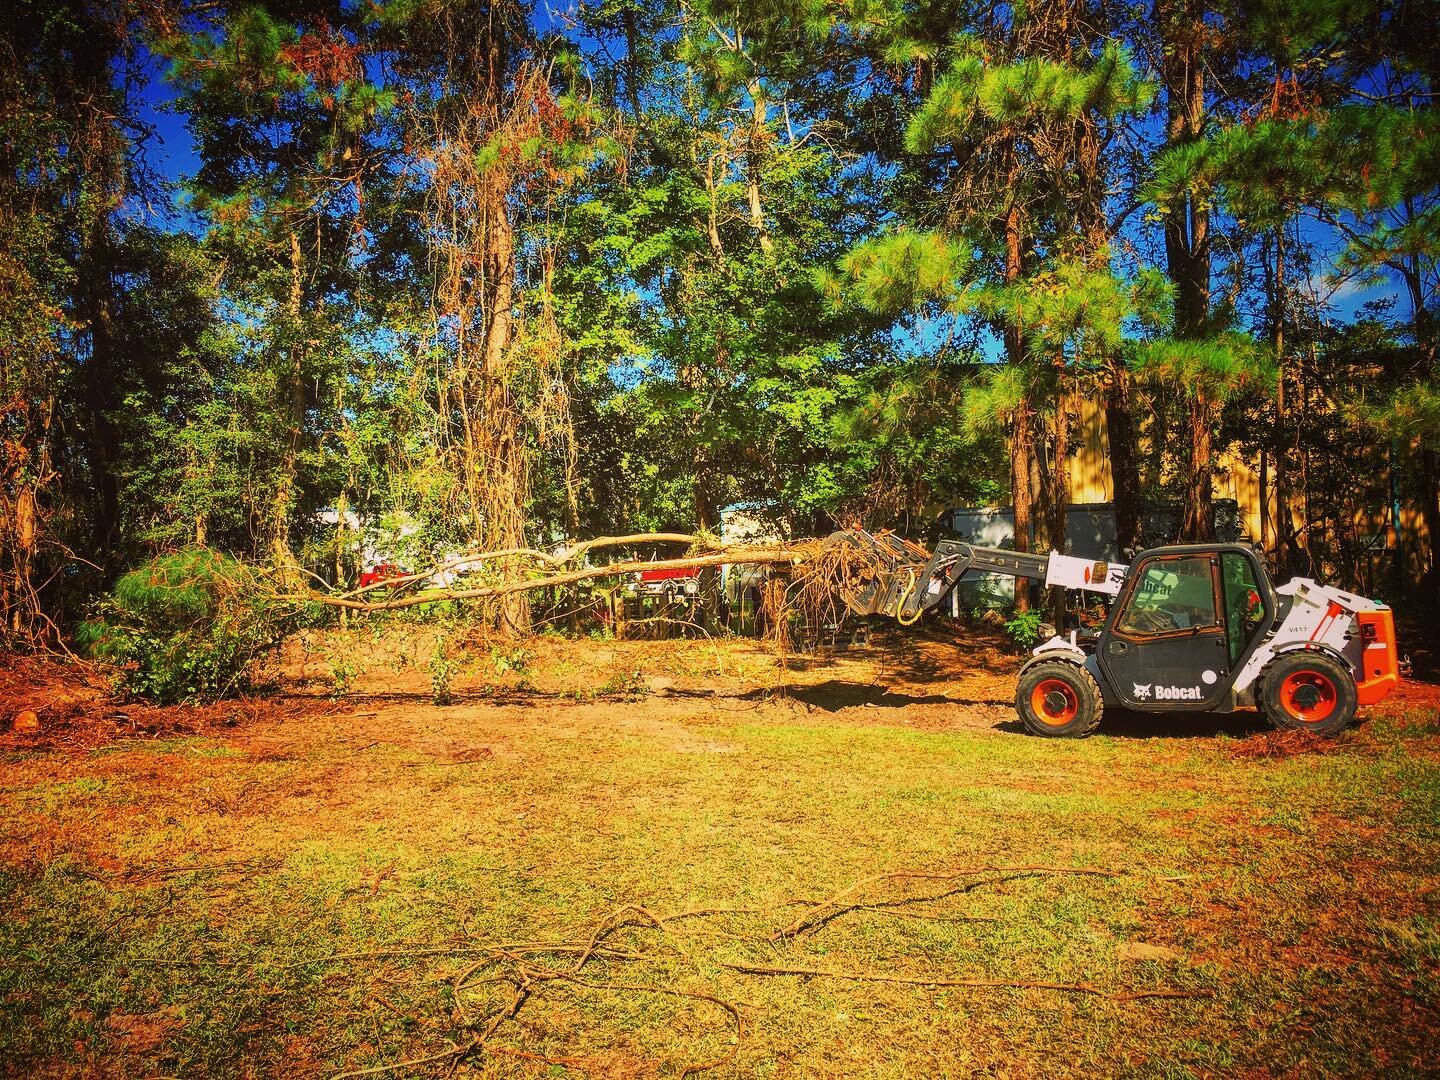 Setting up for the pole vaulting event..... or heavy equipment jousting 😂 #bobcatequipment #telehandler #obx #heavyequipment #equipmentoperator #treeclearing #lotclearing #treework #stihlms462